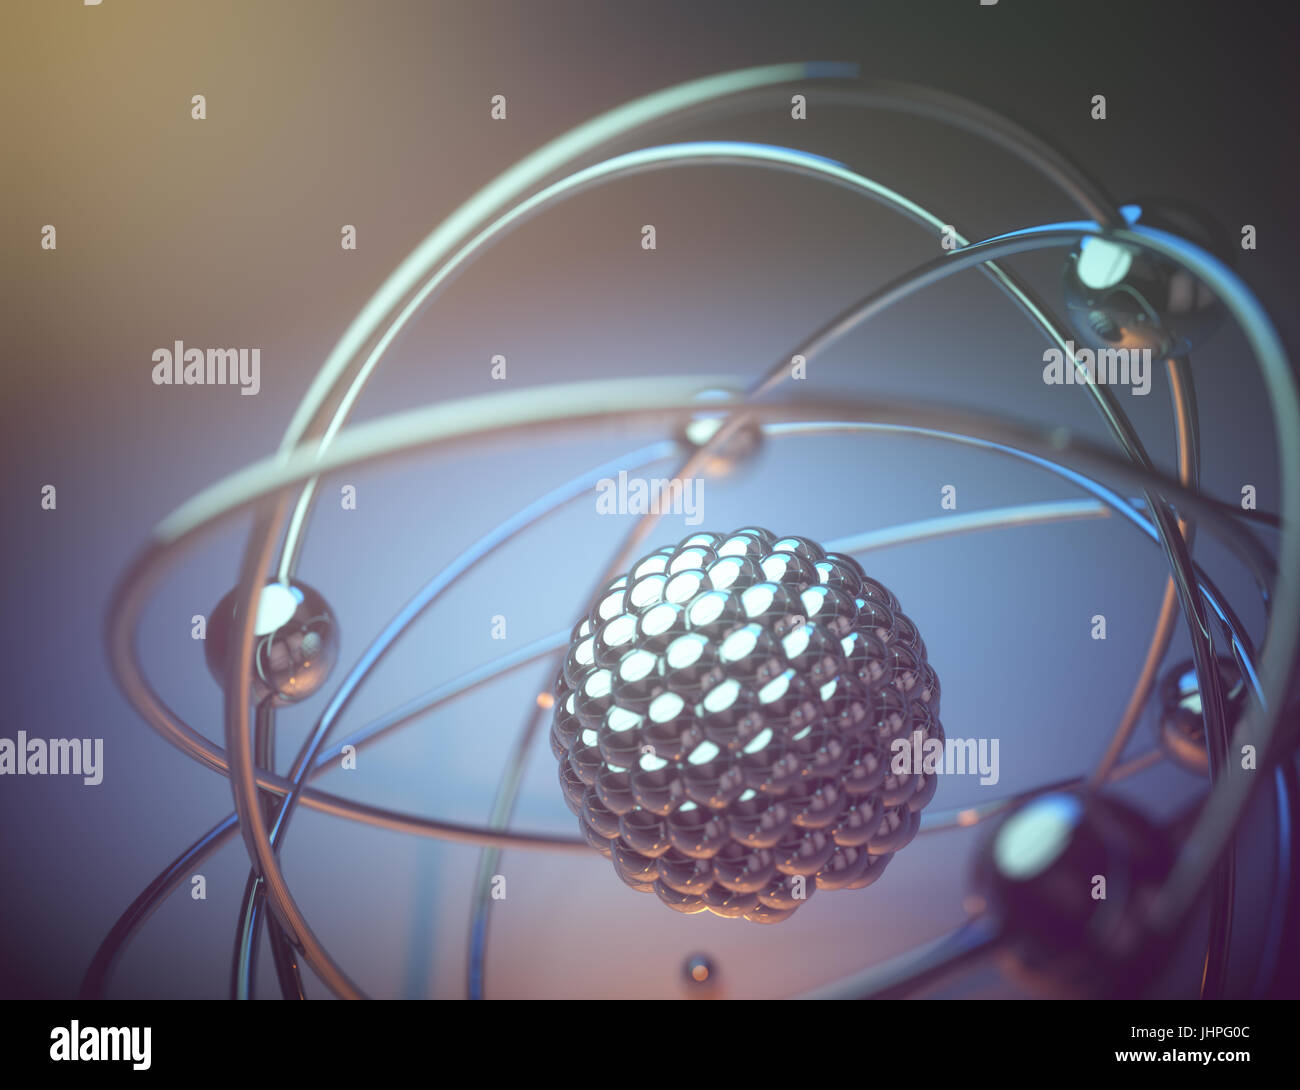 Ilustración 3D. Concepto de imagen un modelo atómico nuclear con la fusión  nuclear Fotografía de stock - Alamy